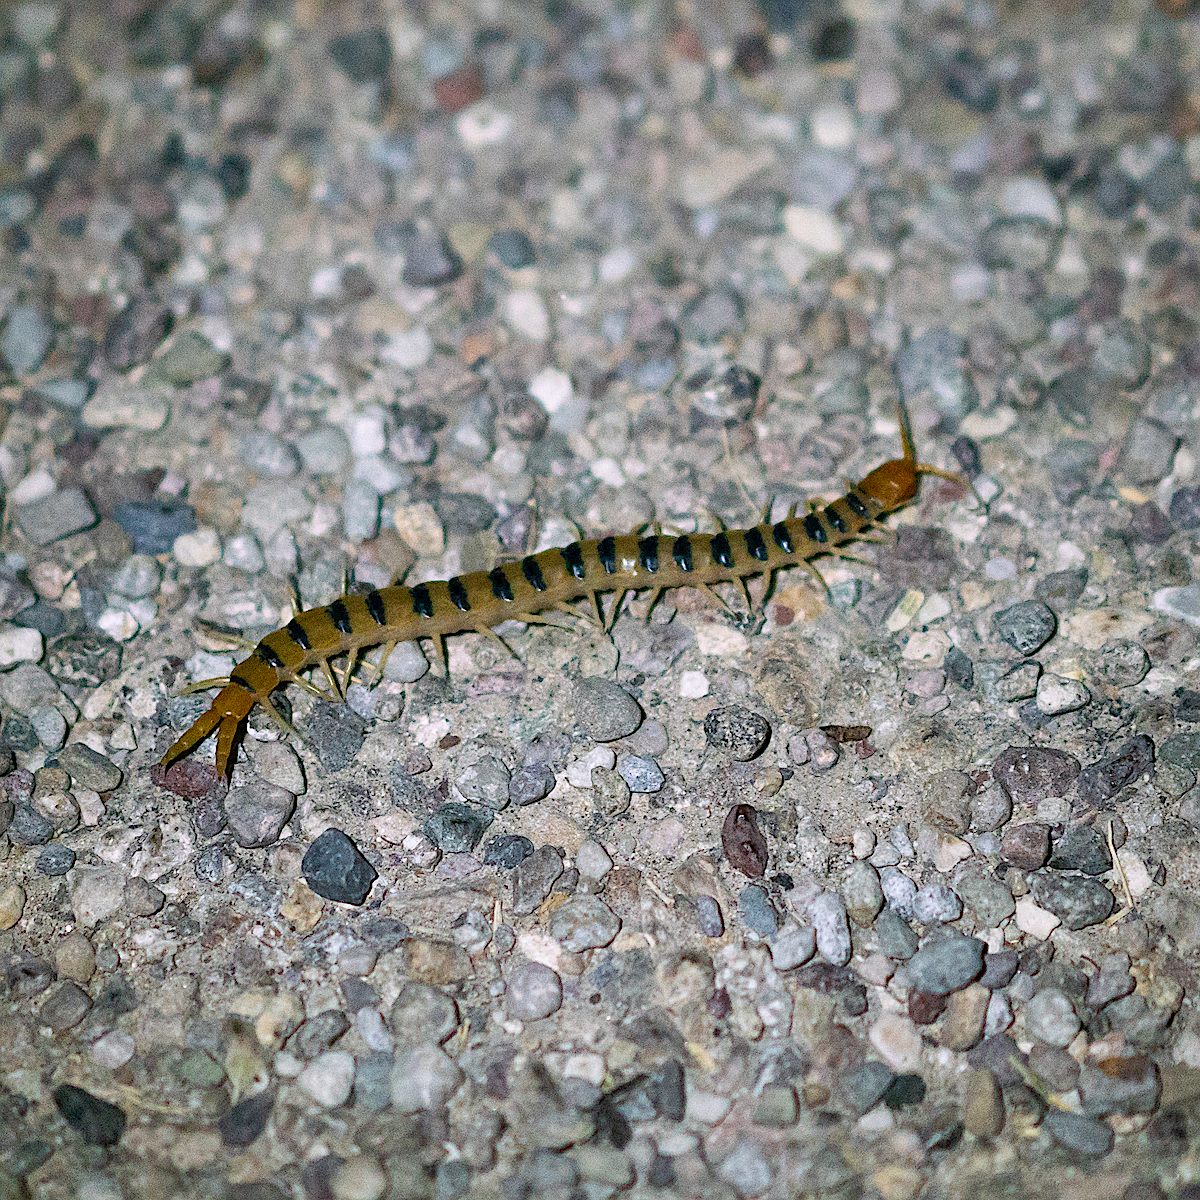 Centipede. May 2018.